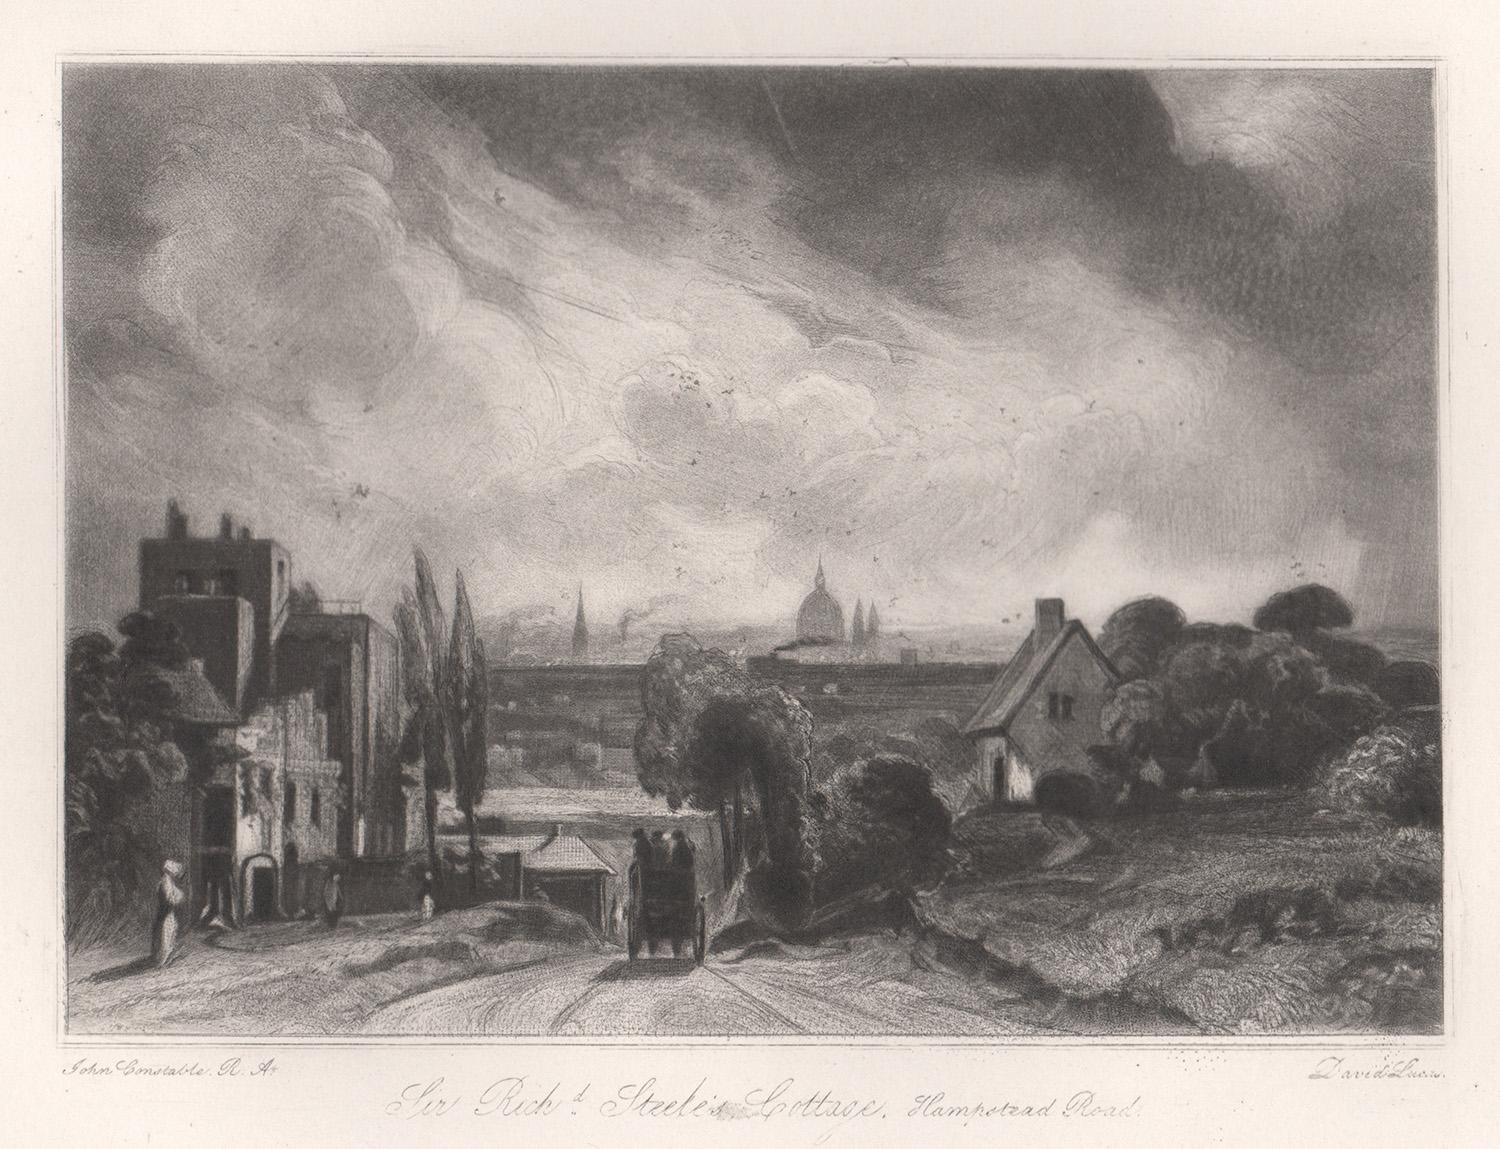 Sir Richard Steele's Cottage, Hampstead Rd Mezzotint after John Constable, 1855